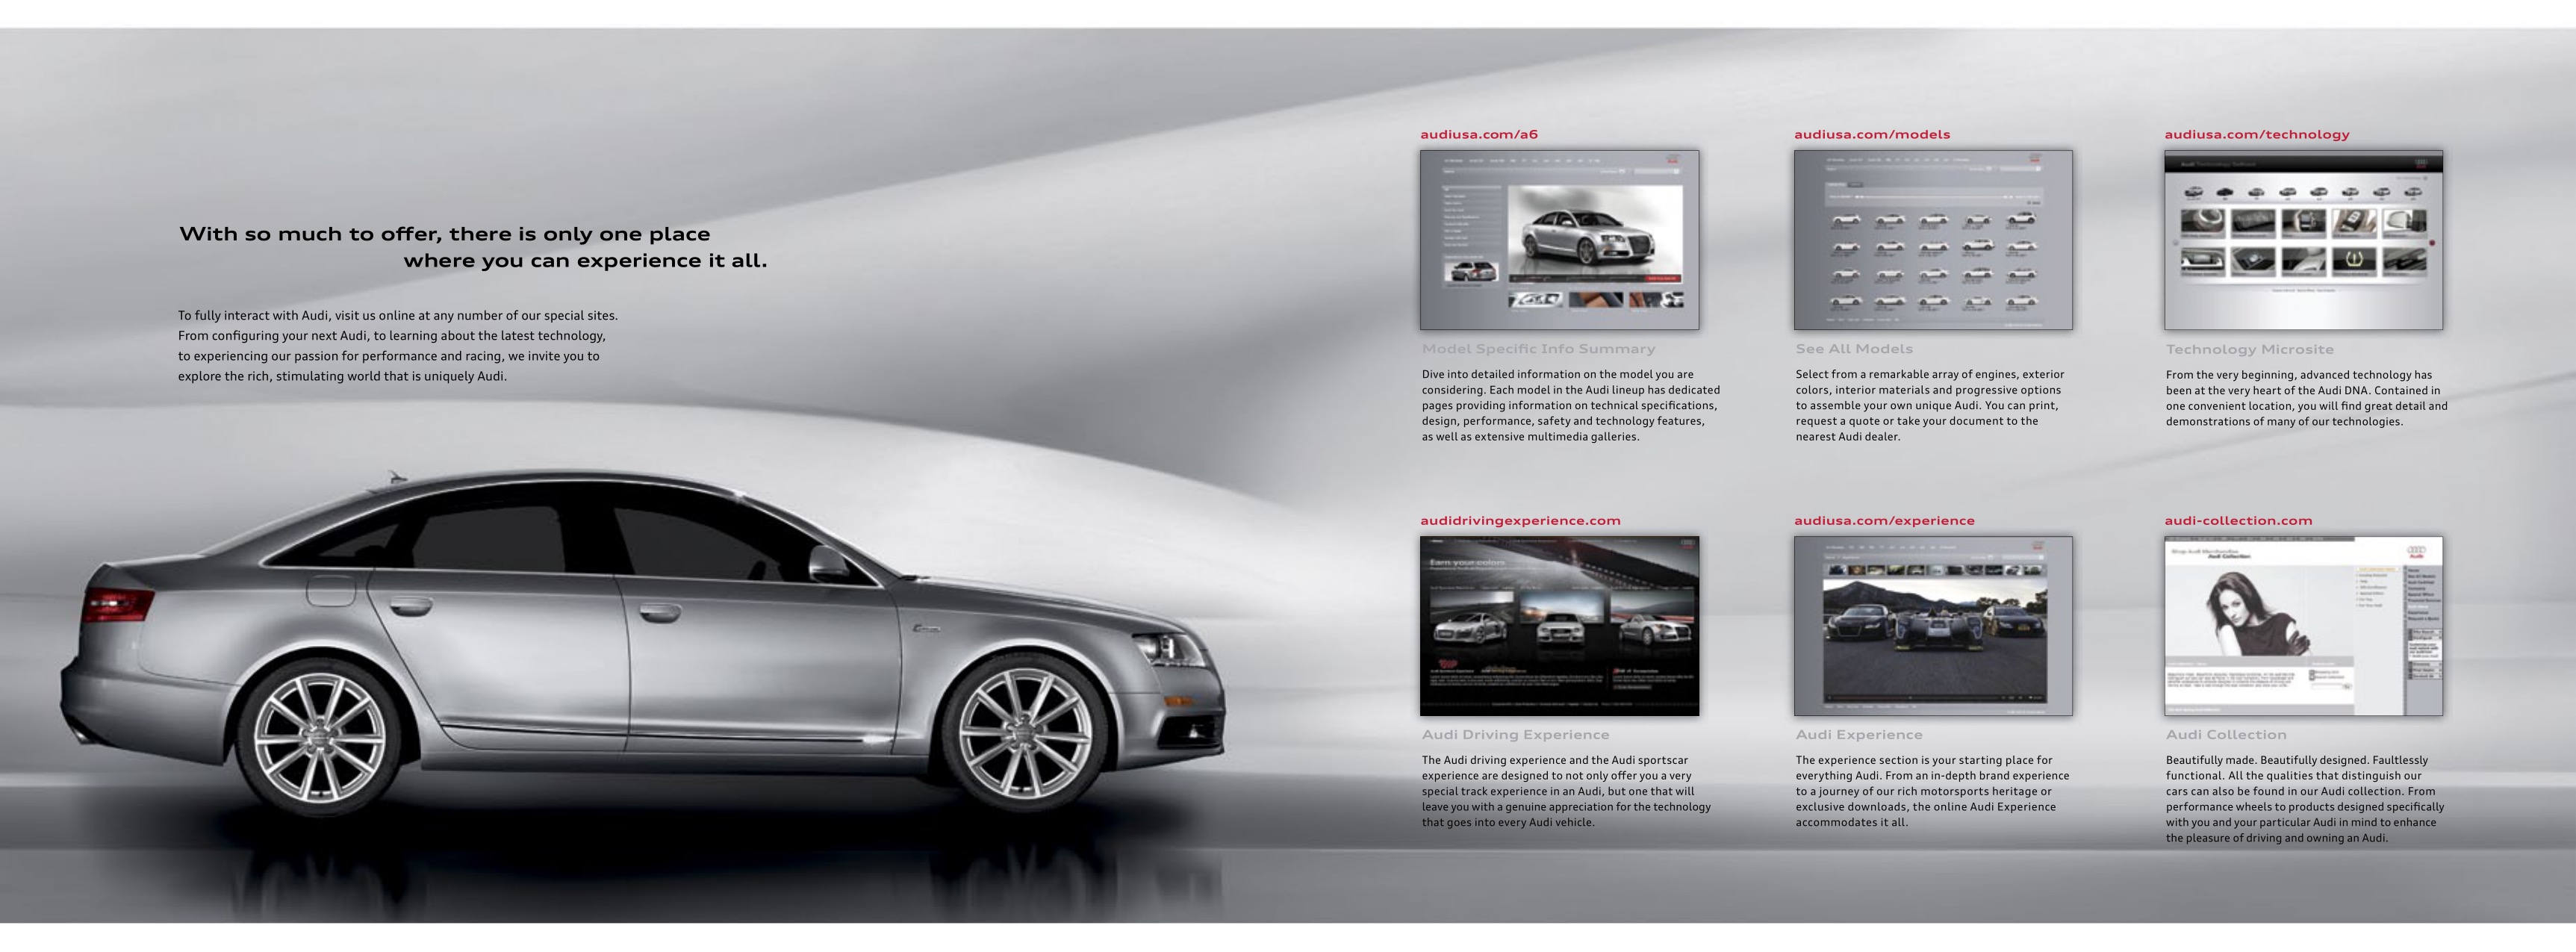 2010 Audi A6 Brochure Page 24